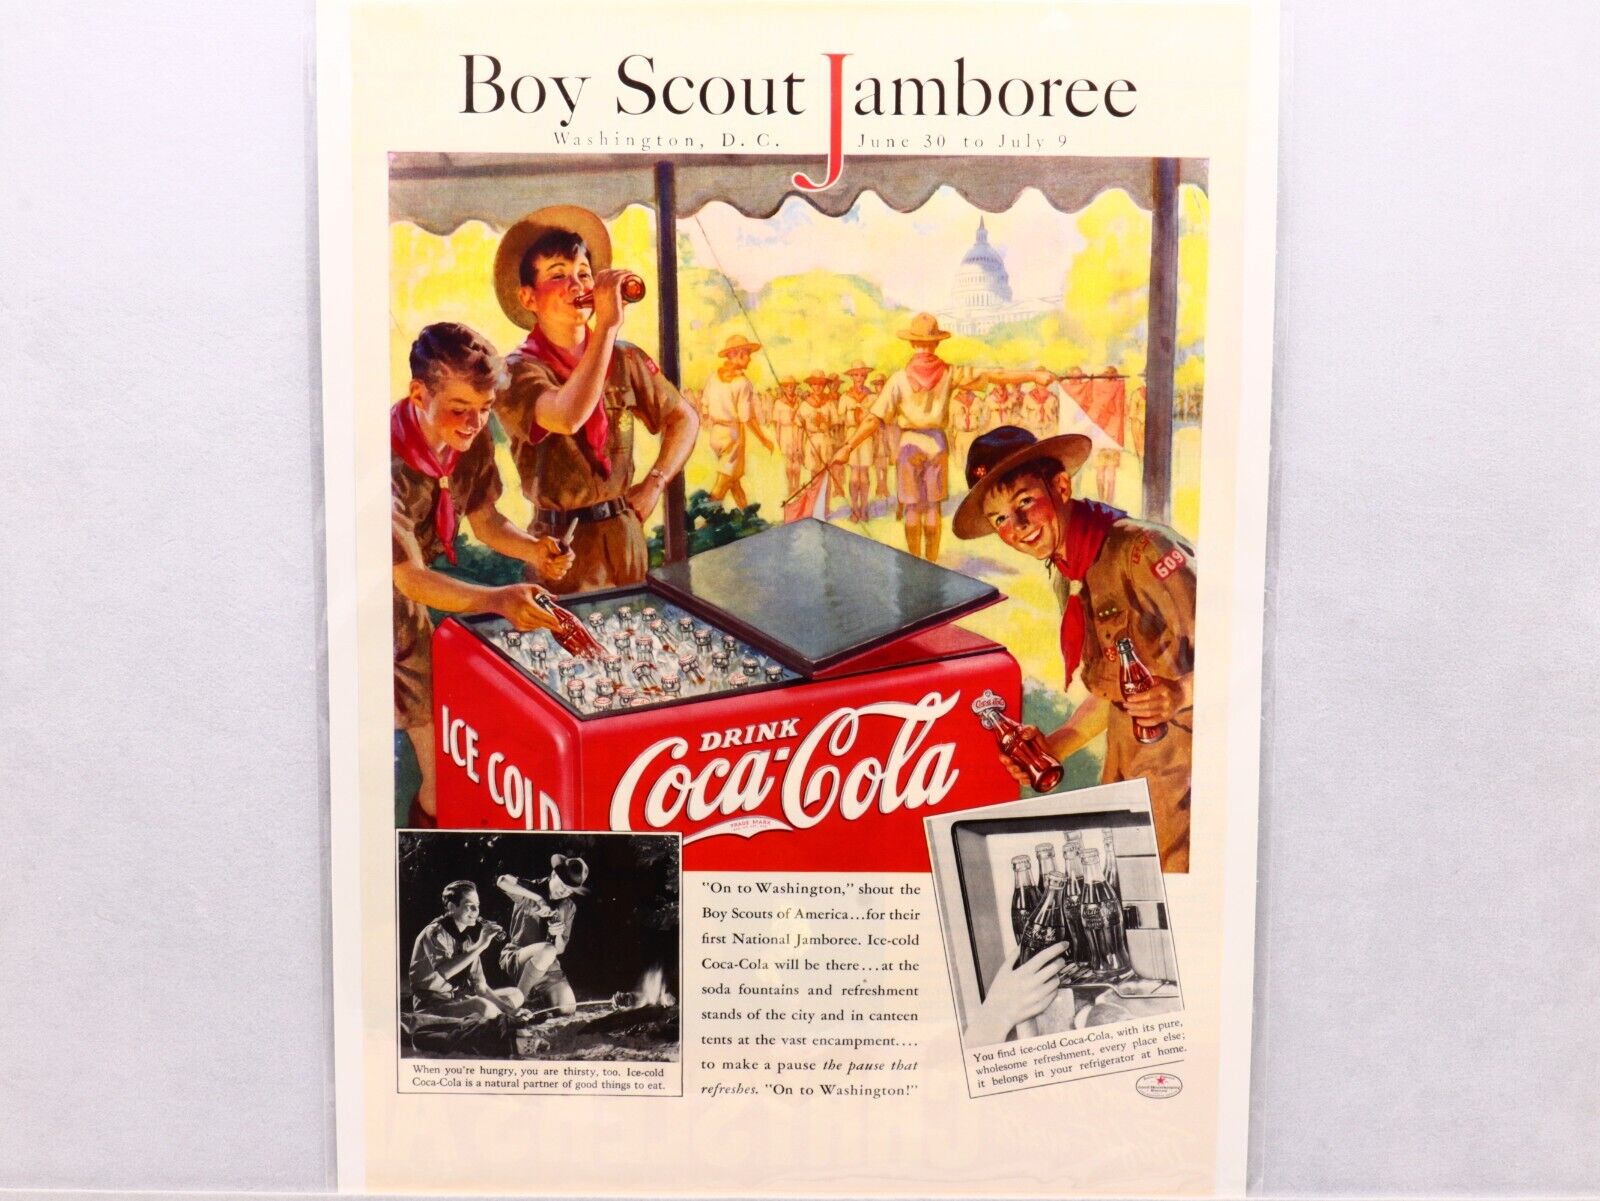 1937 COCA-COLA AD, HIGHLIGHTING THE BOY SCOUT JAMBOREE IN WASHINGTON DC.